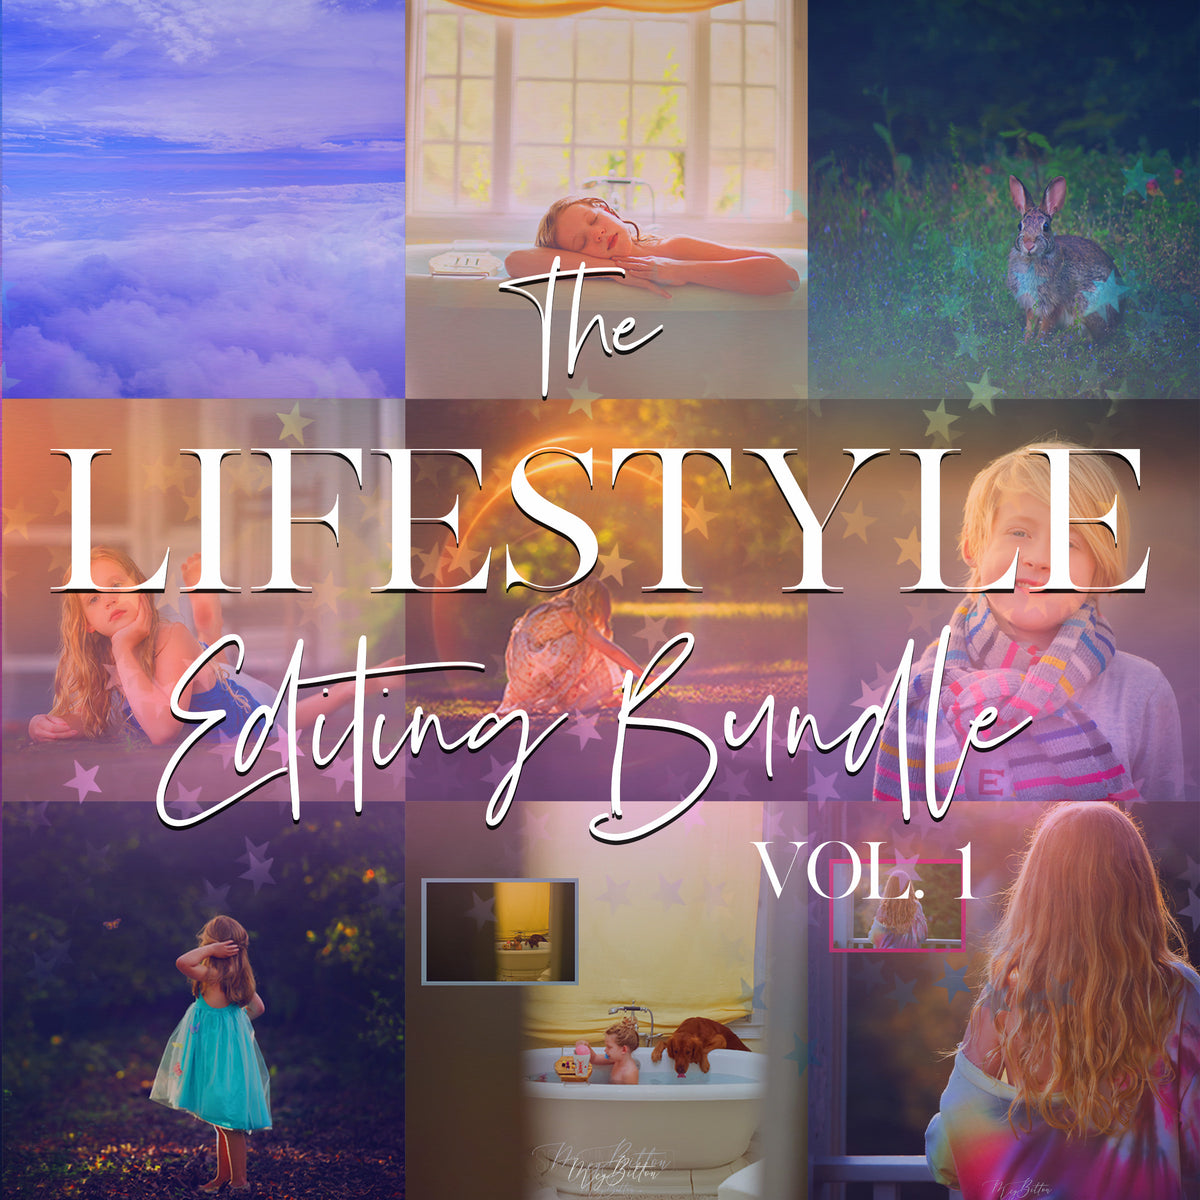 The Lifestyle Editing Bundle Vol. 1